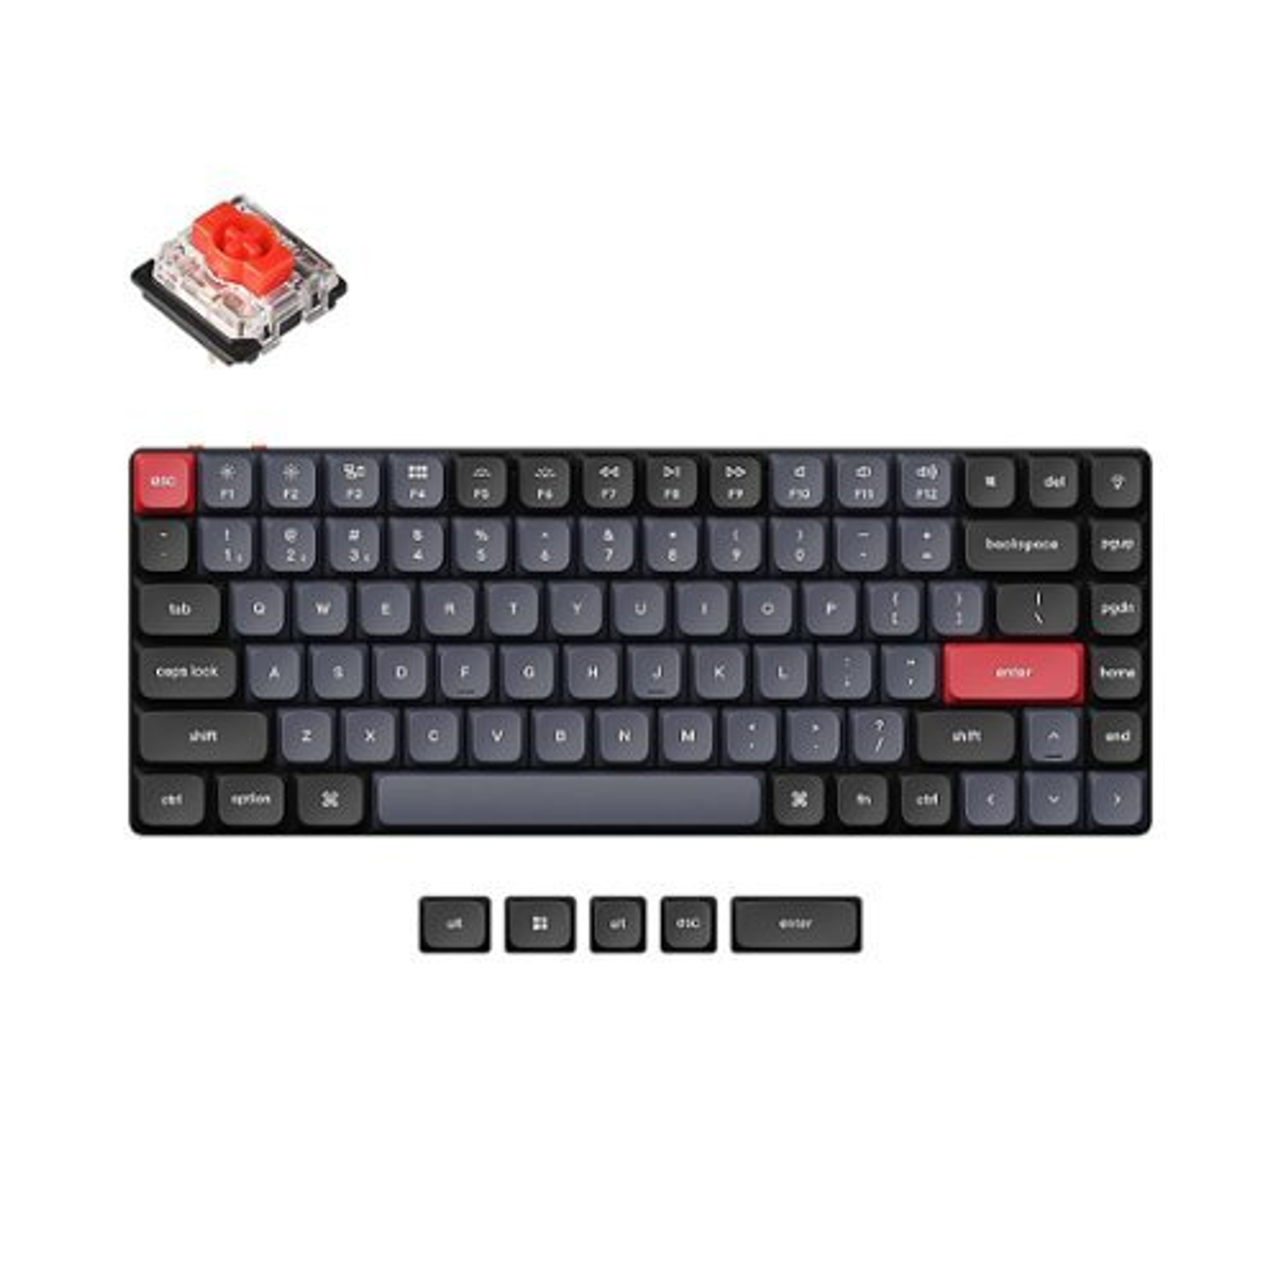 Keychron - K3 Pro Red Switch Mechanical Keyboard Mac or PC - Black